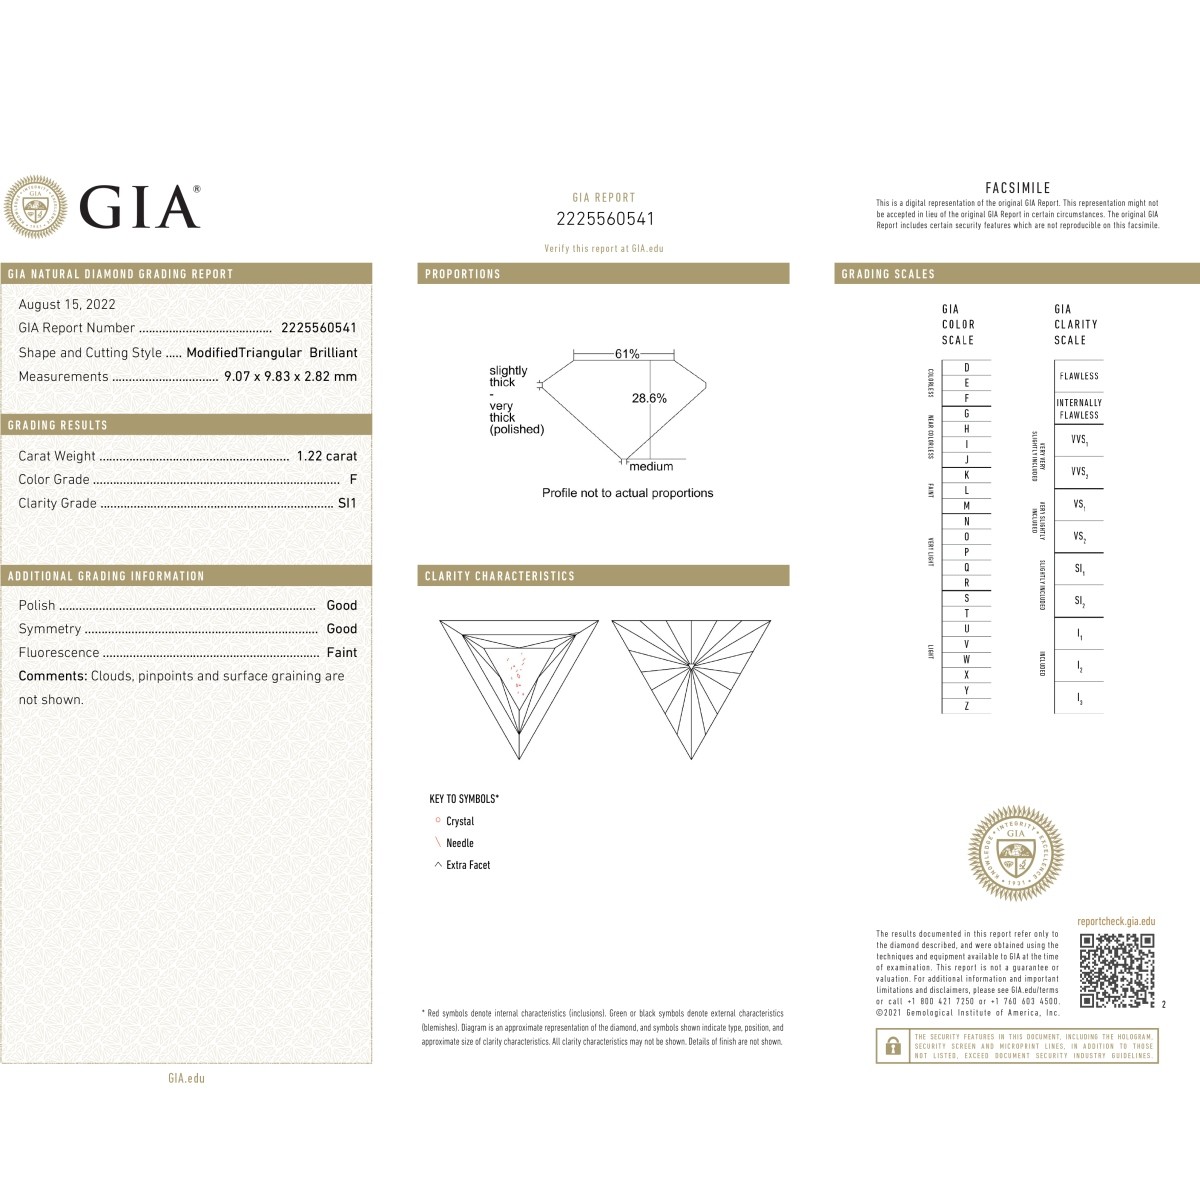 AGL/GIA Emerald, Diamond and 18K Ring